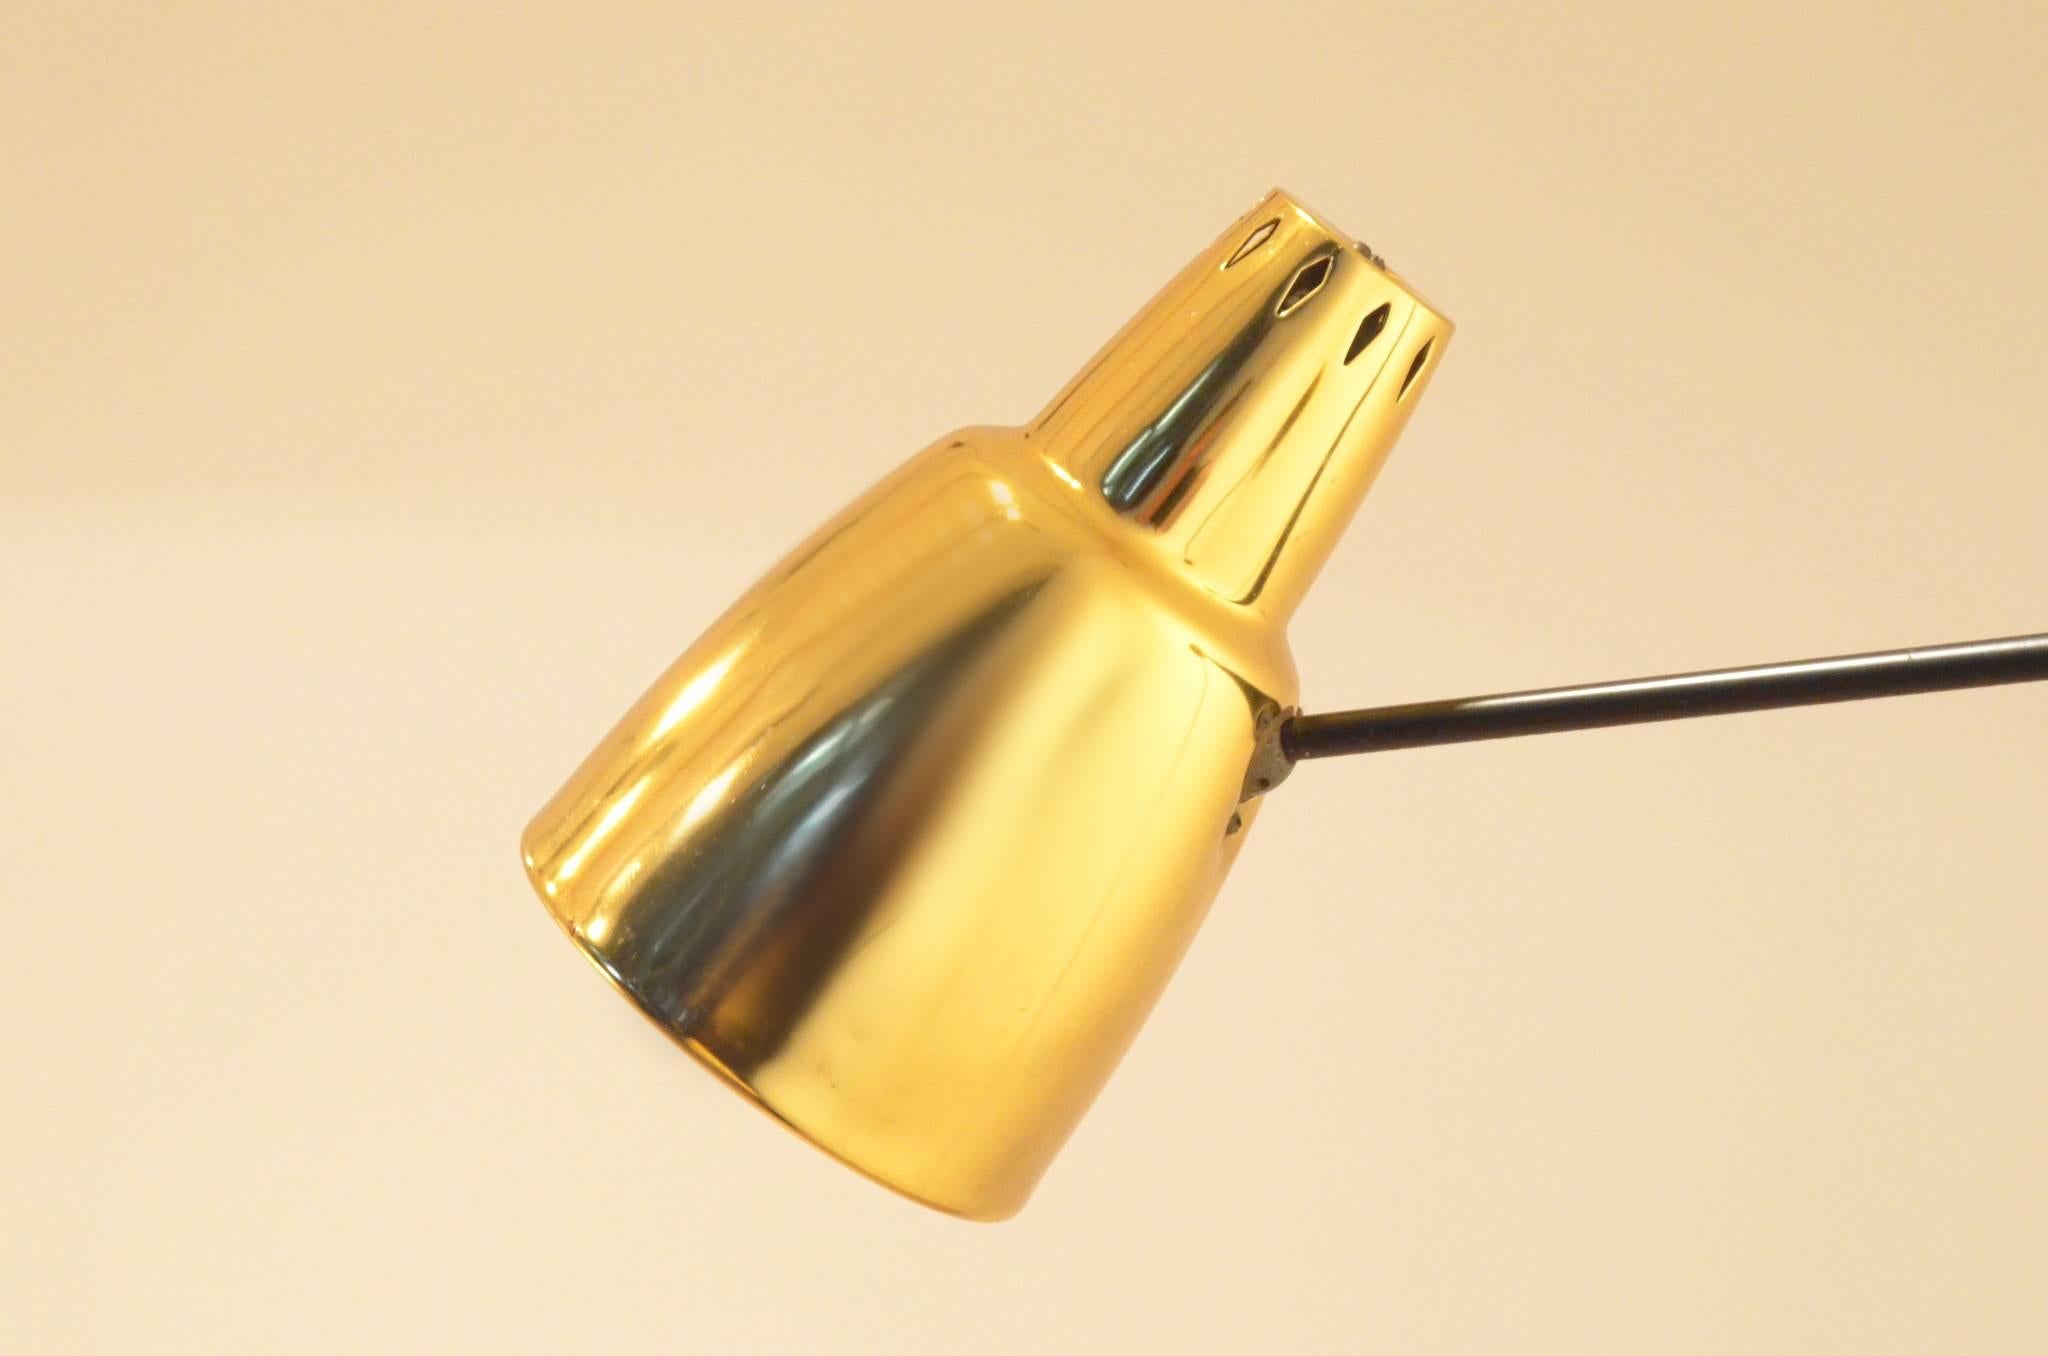 Two French Design Luminalite Golden Aluminium Metal Arm Lamps Sconces For Sale 4